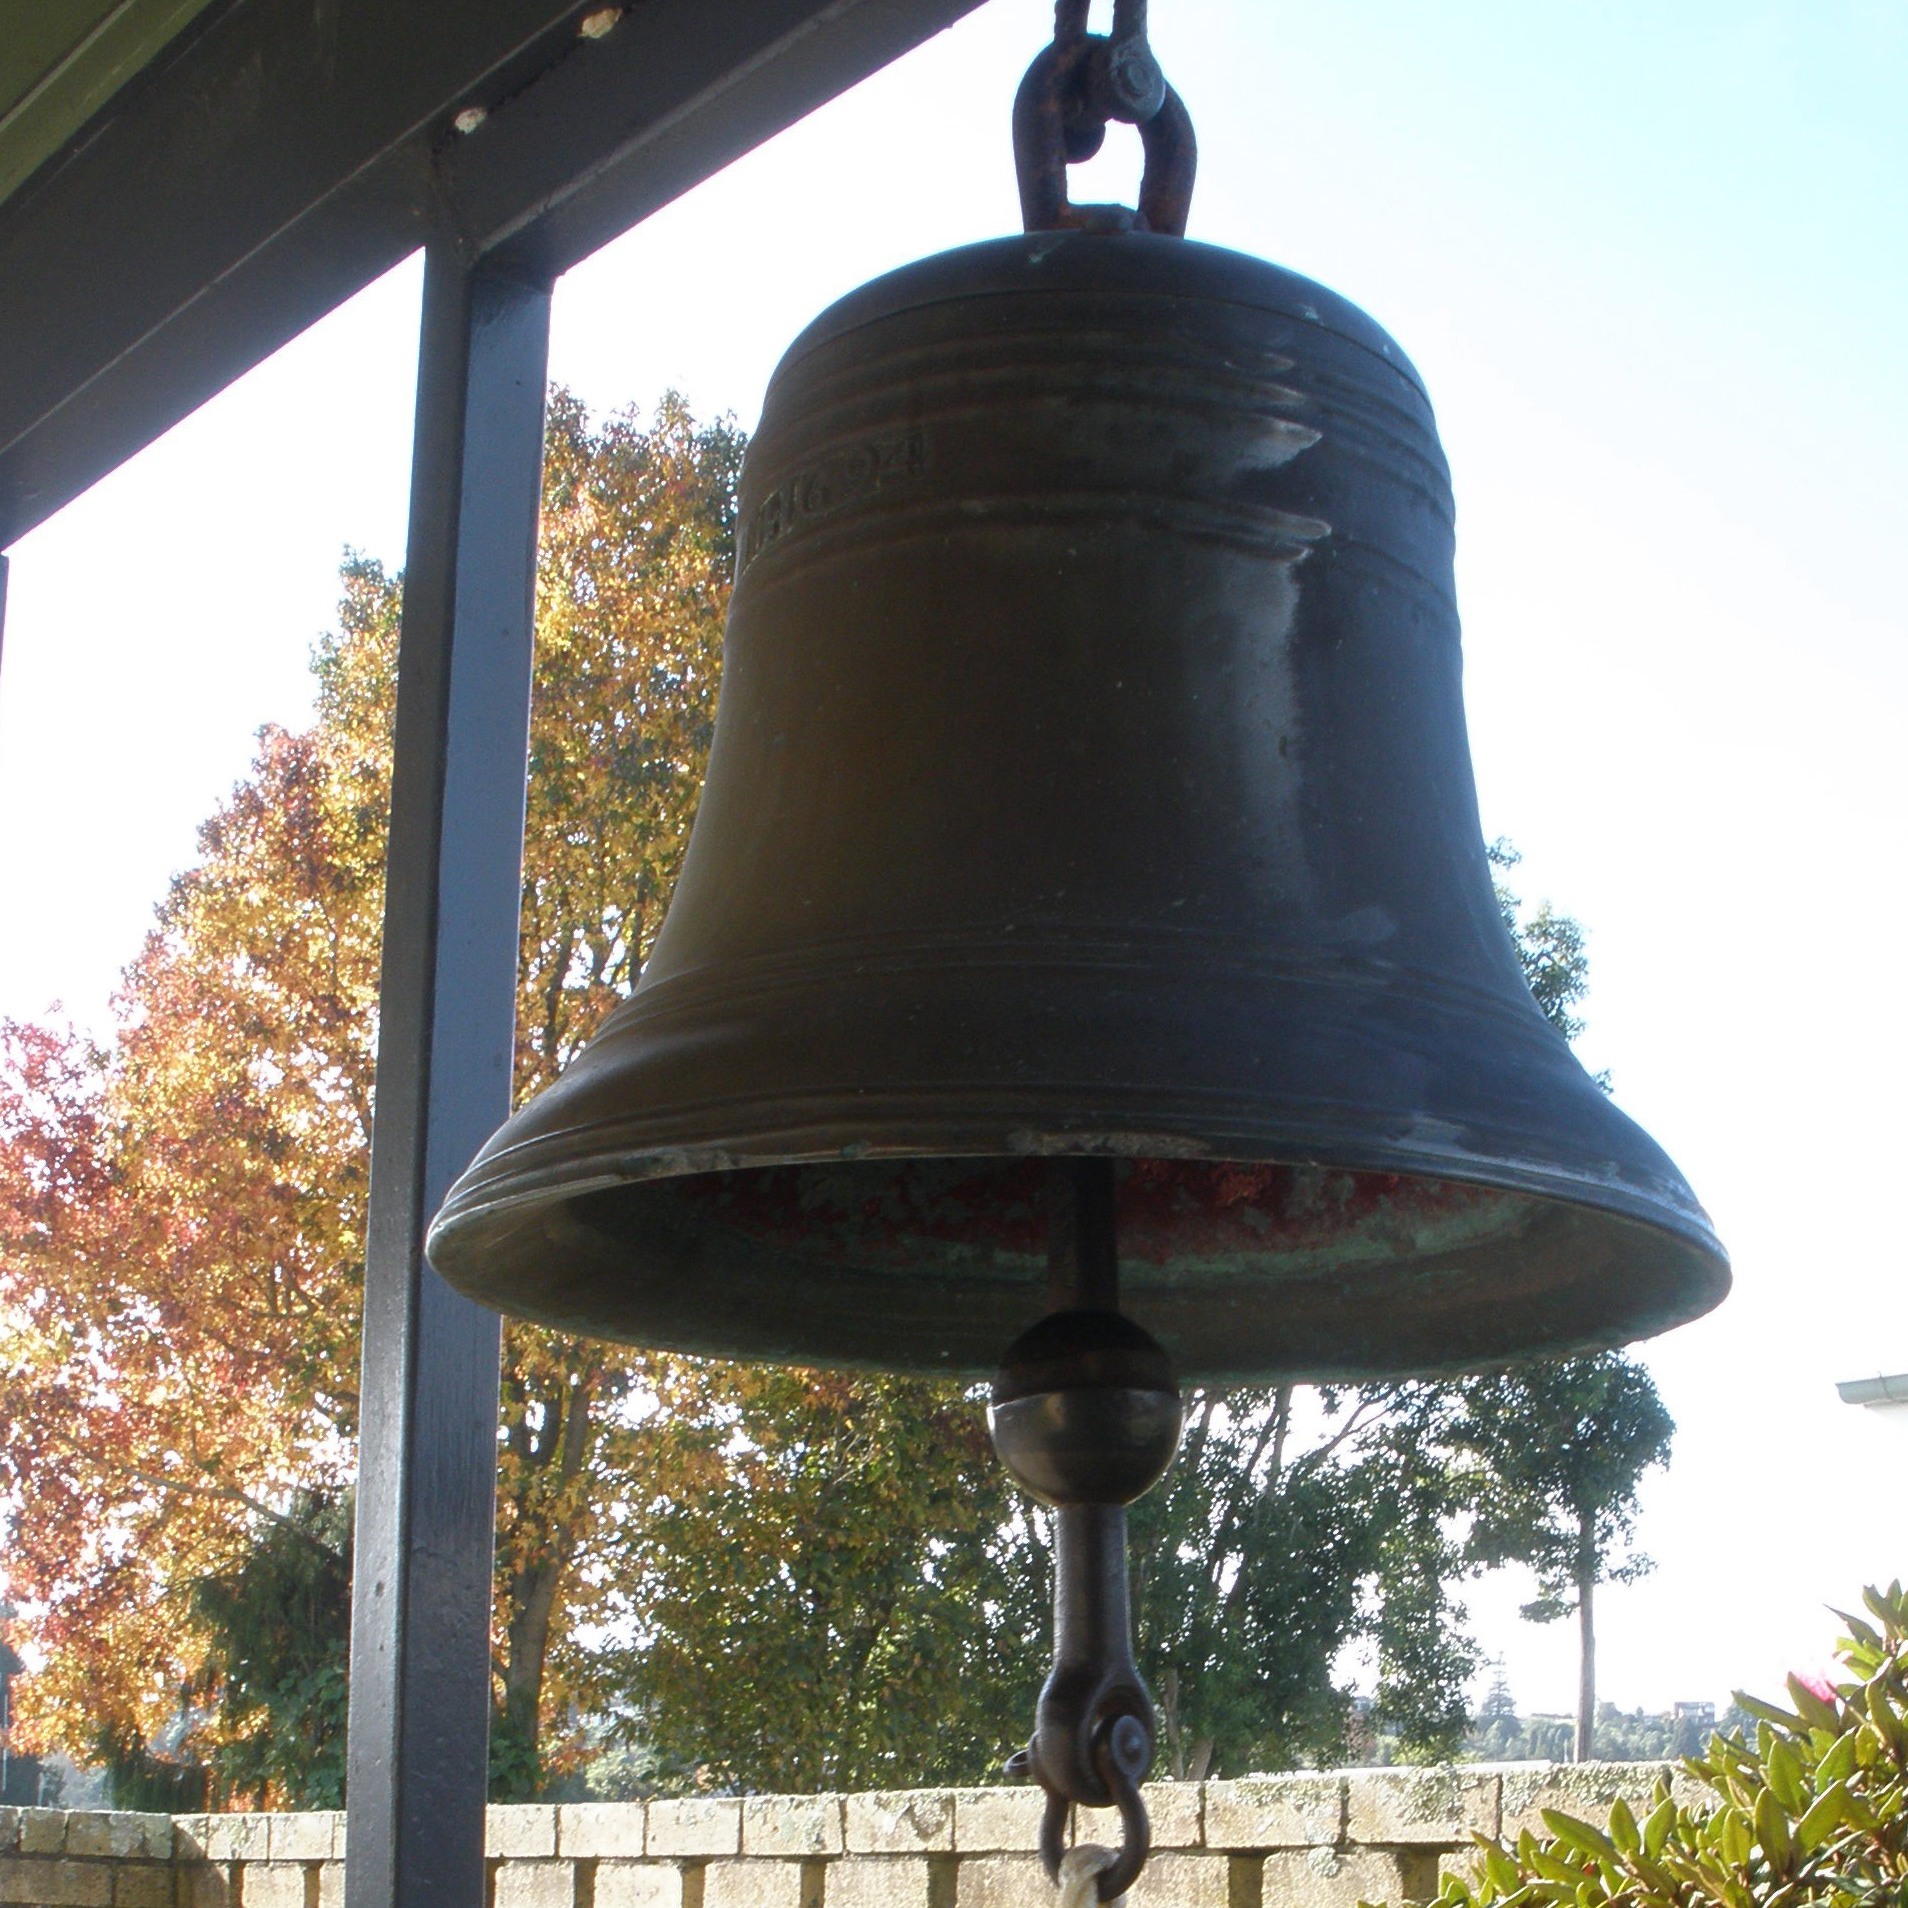 Stolen historic bell found in scrap metal yard | Otago Daily Times ...